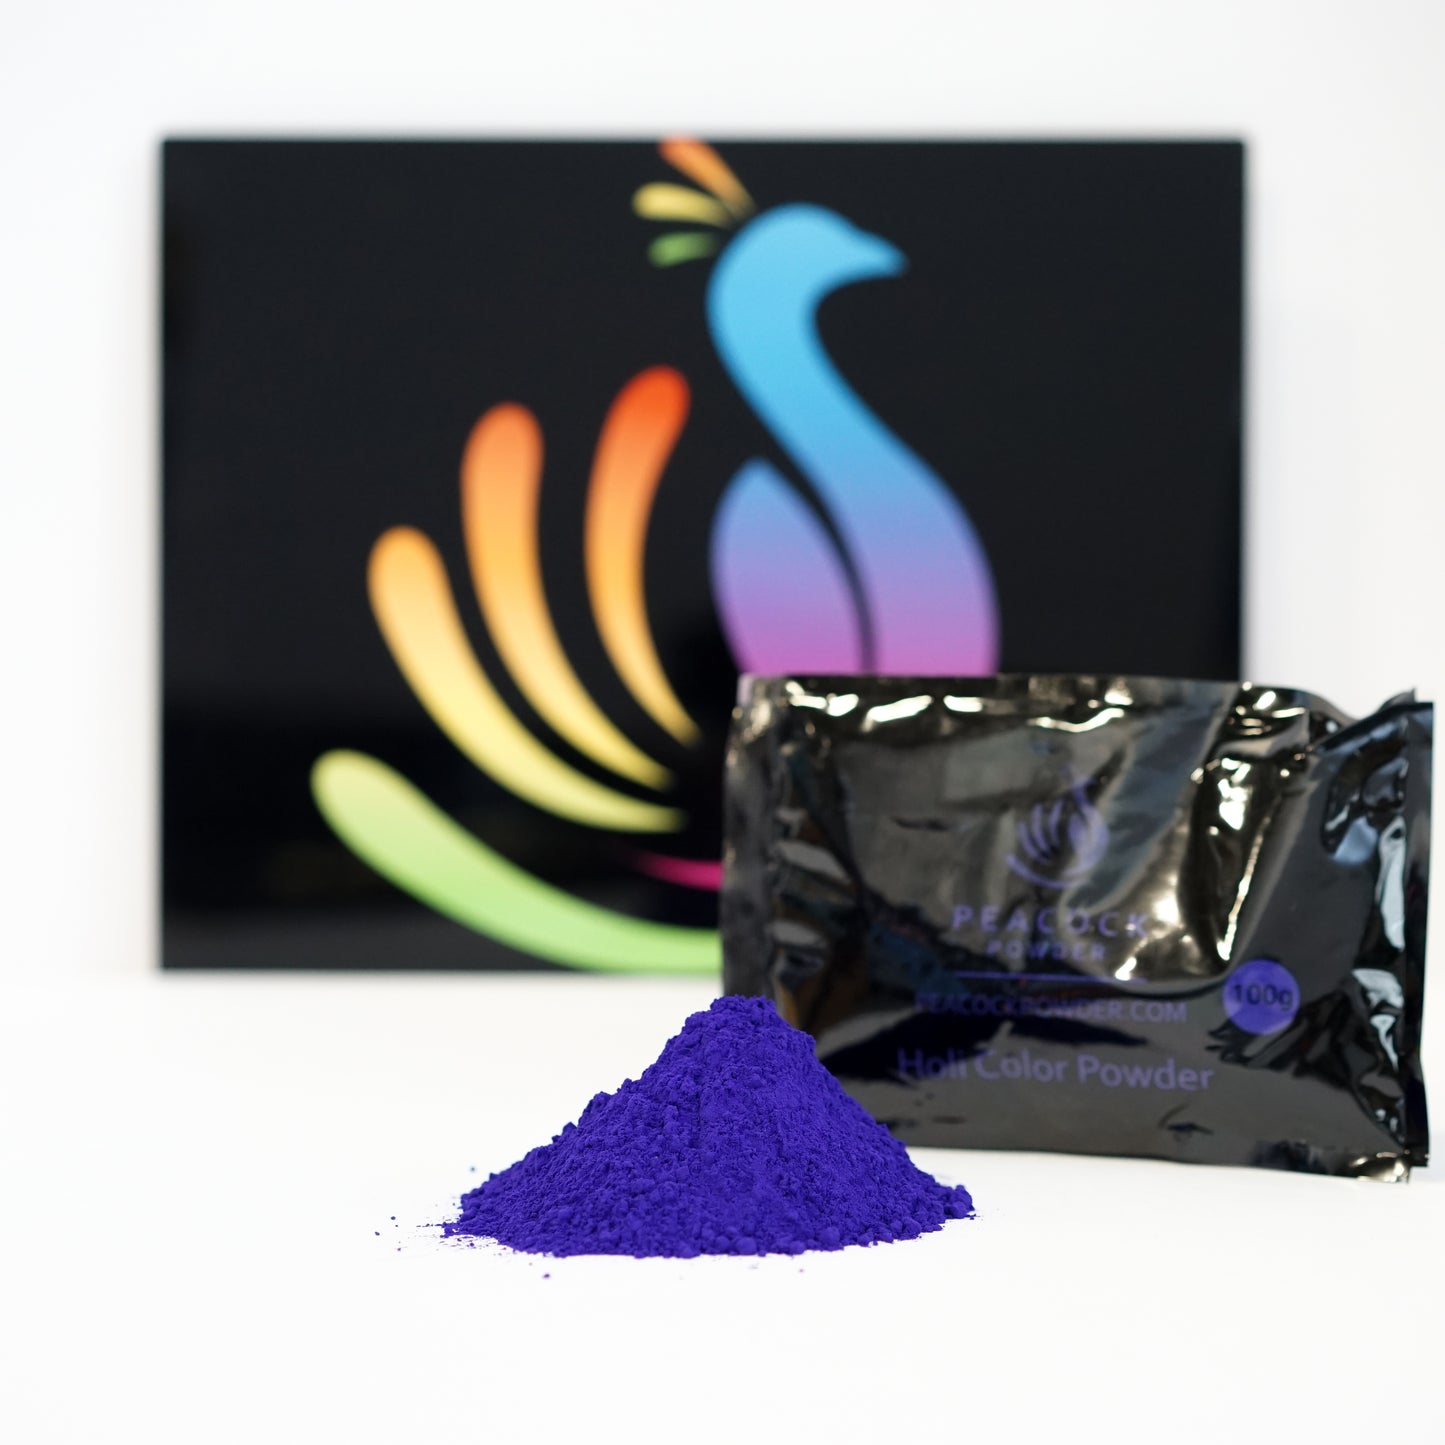 purple color powder holi powder